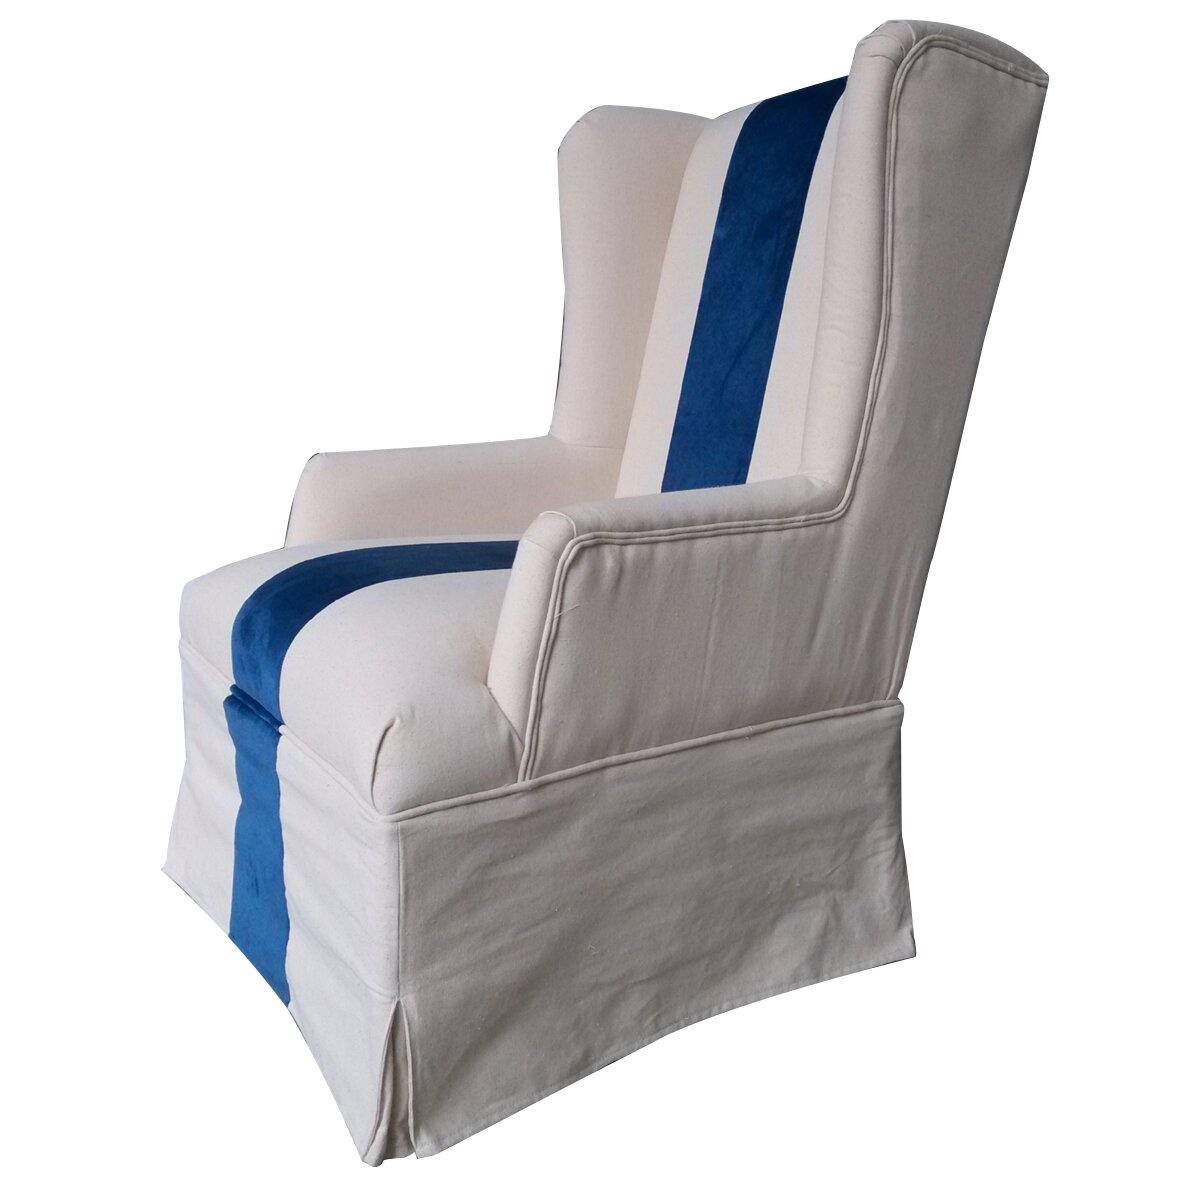 Aandb home group inc skirted arm chair